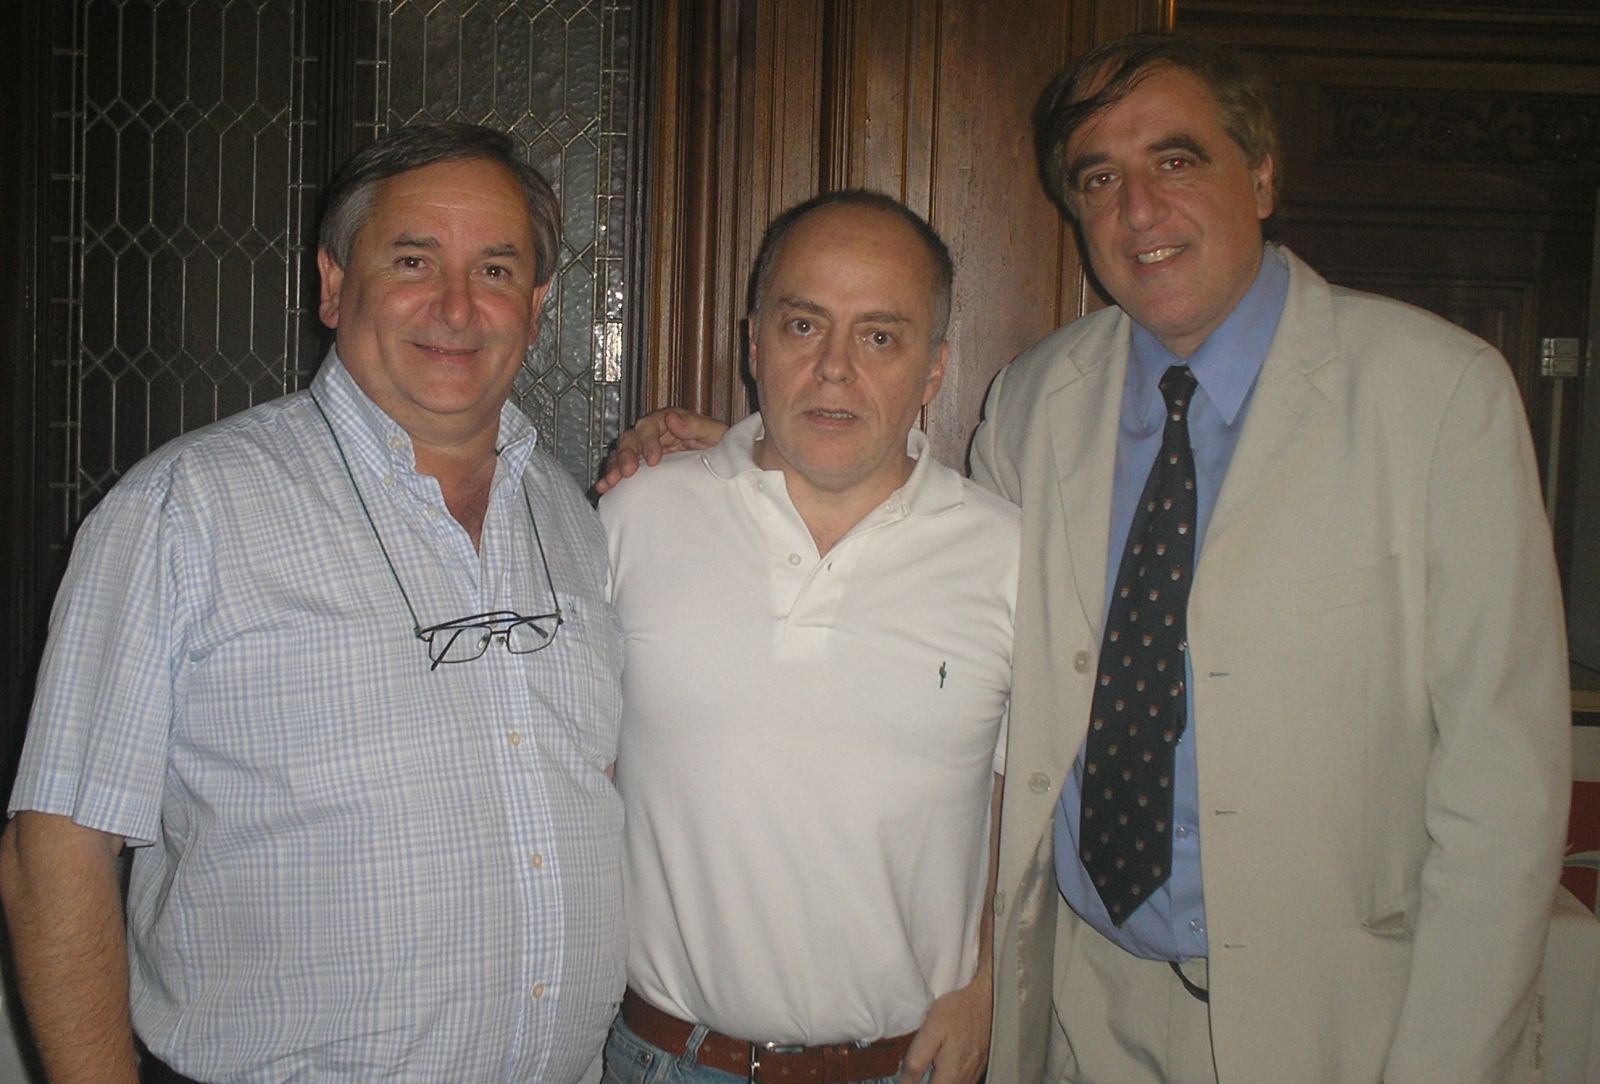 3 LADAC-Argentina Presidents pictured at the "Club Argentino de Ajedrez" on 18.12.2011. From left to right: Dr. Jorge Eduardo Deforel, Carlos Leon Cranbourne, Dr. Claudio Javier Gonçalves